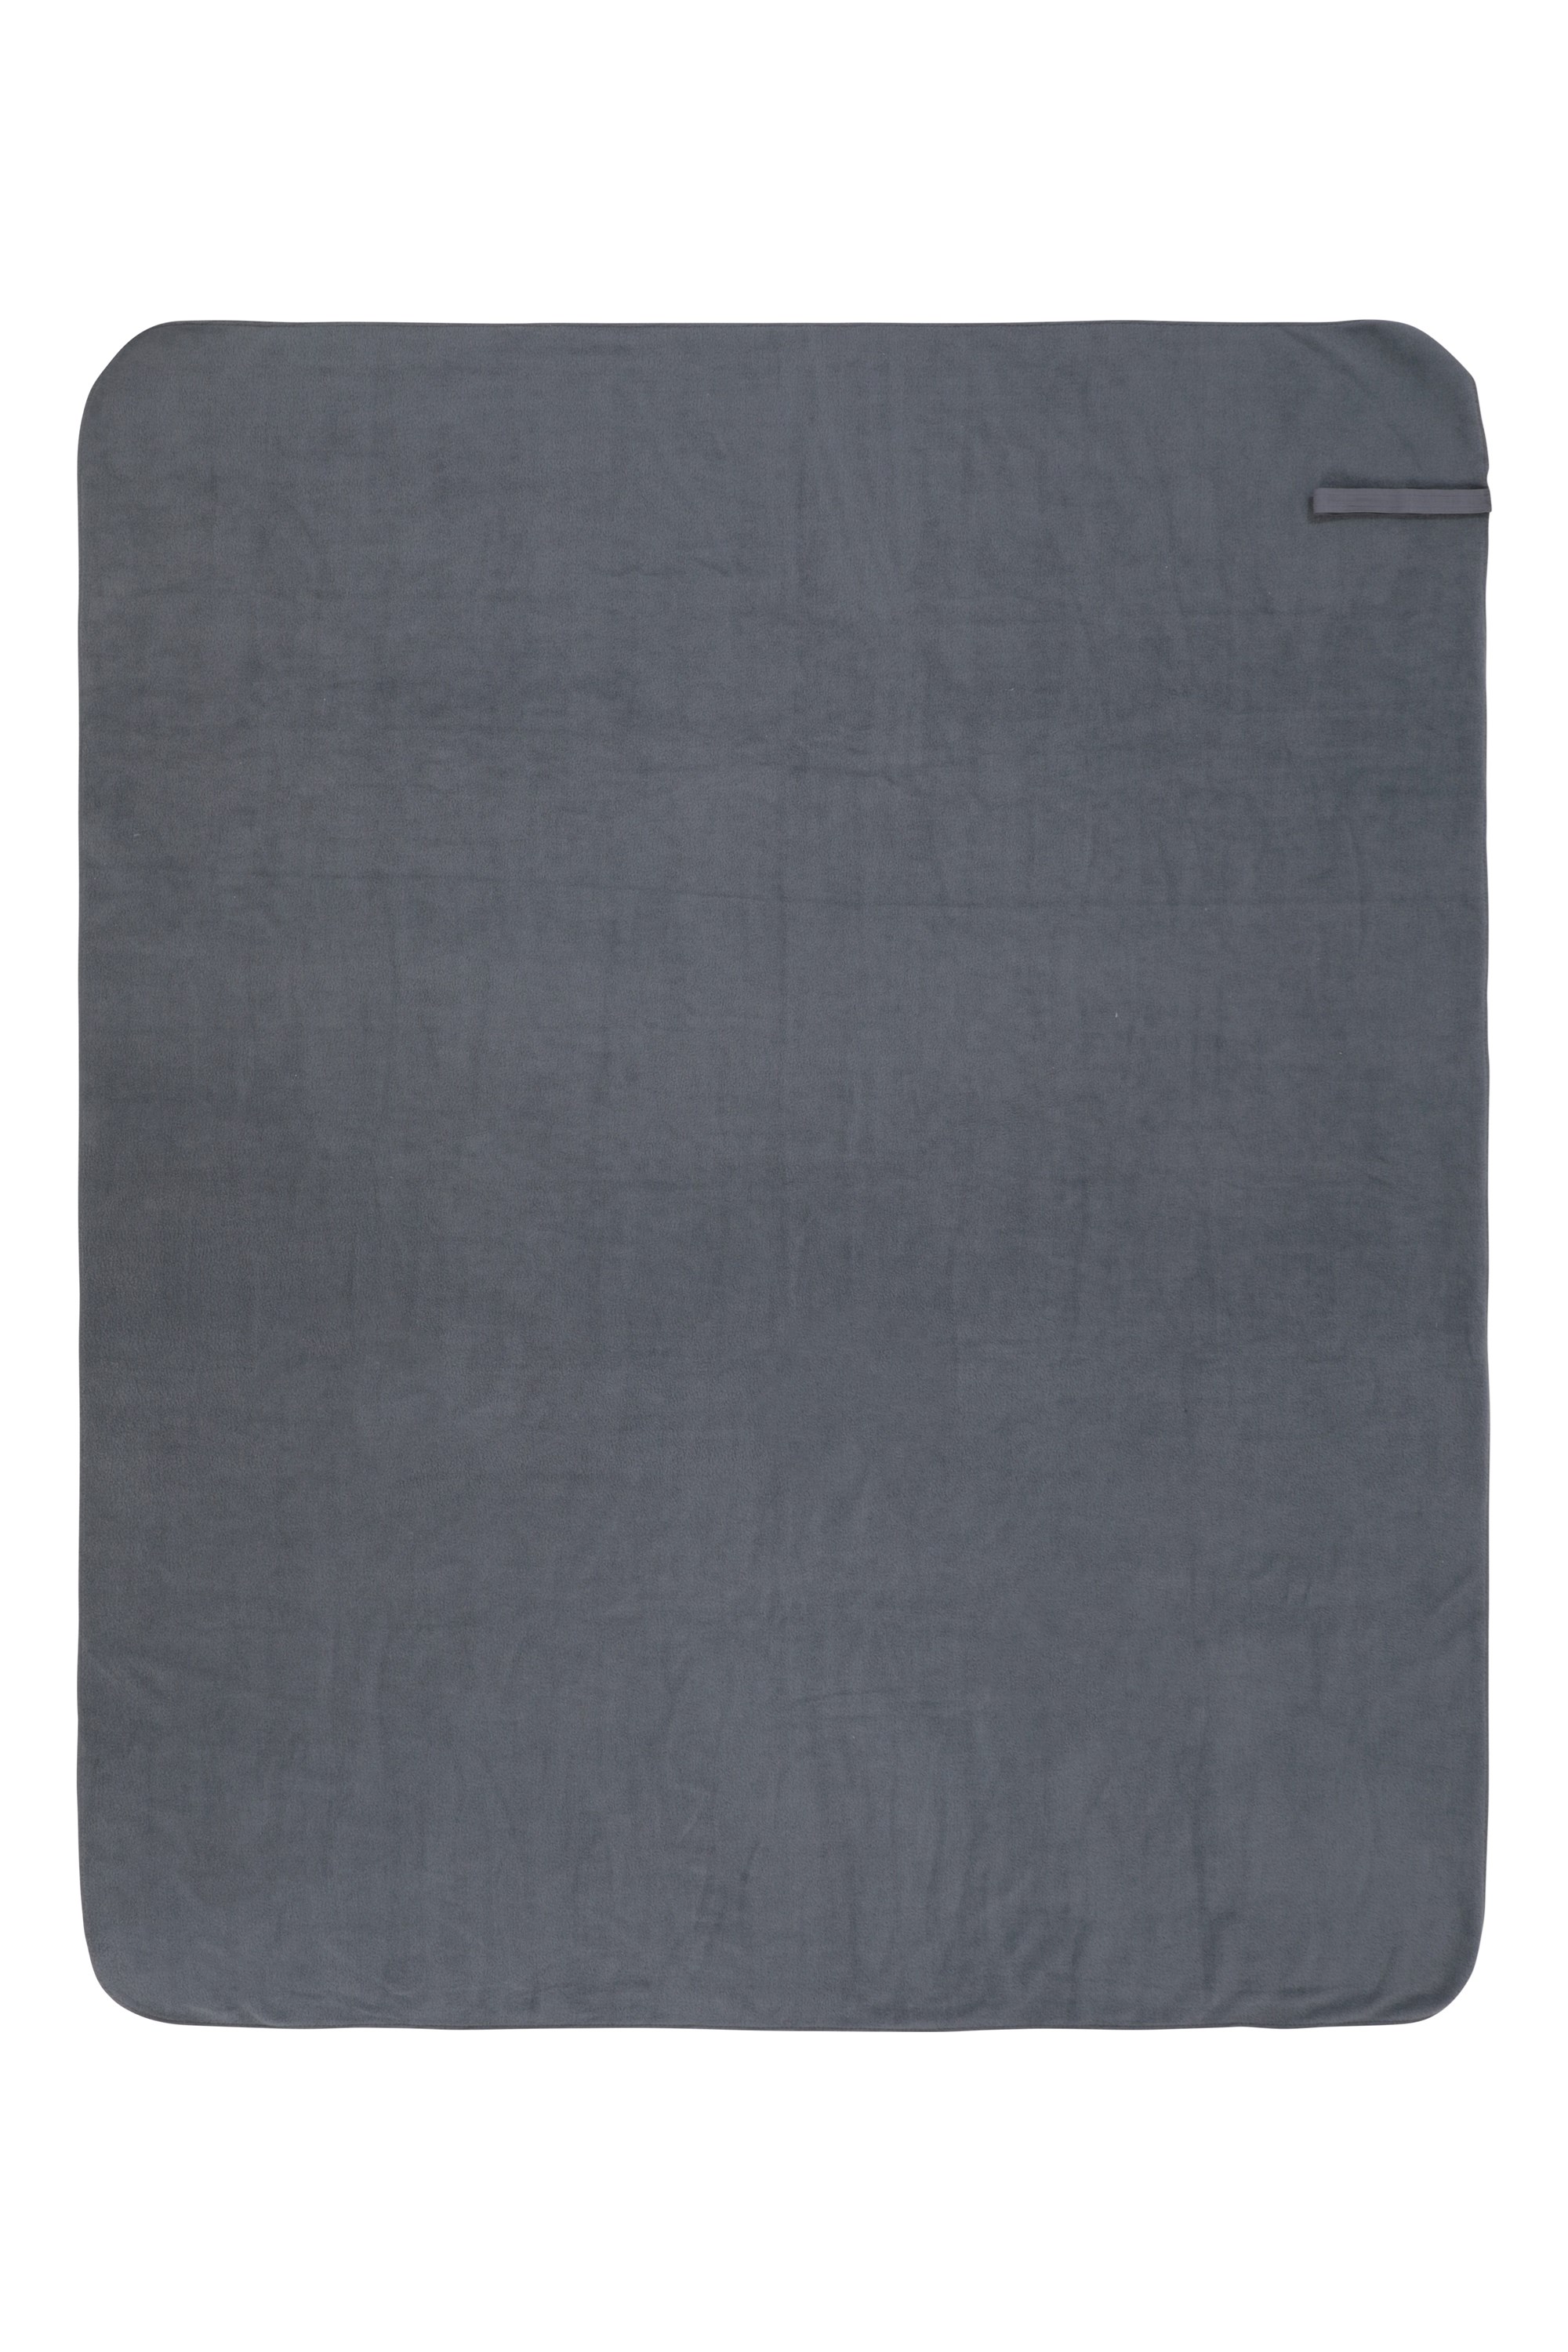 Compact Travel Blanket - Grey